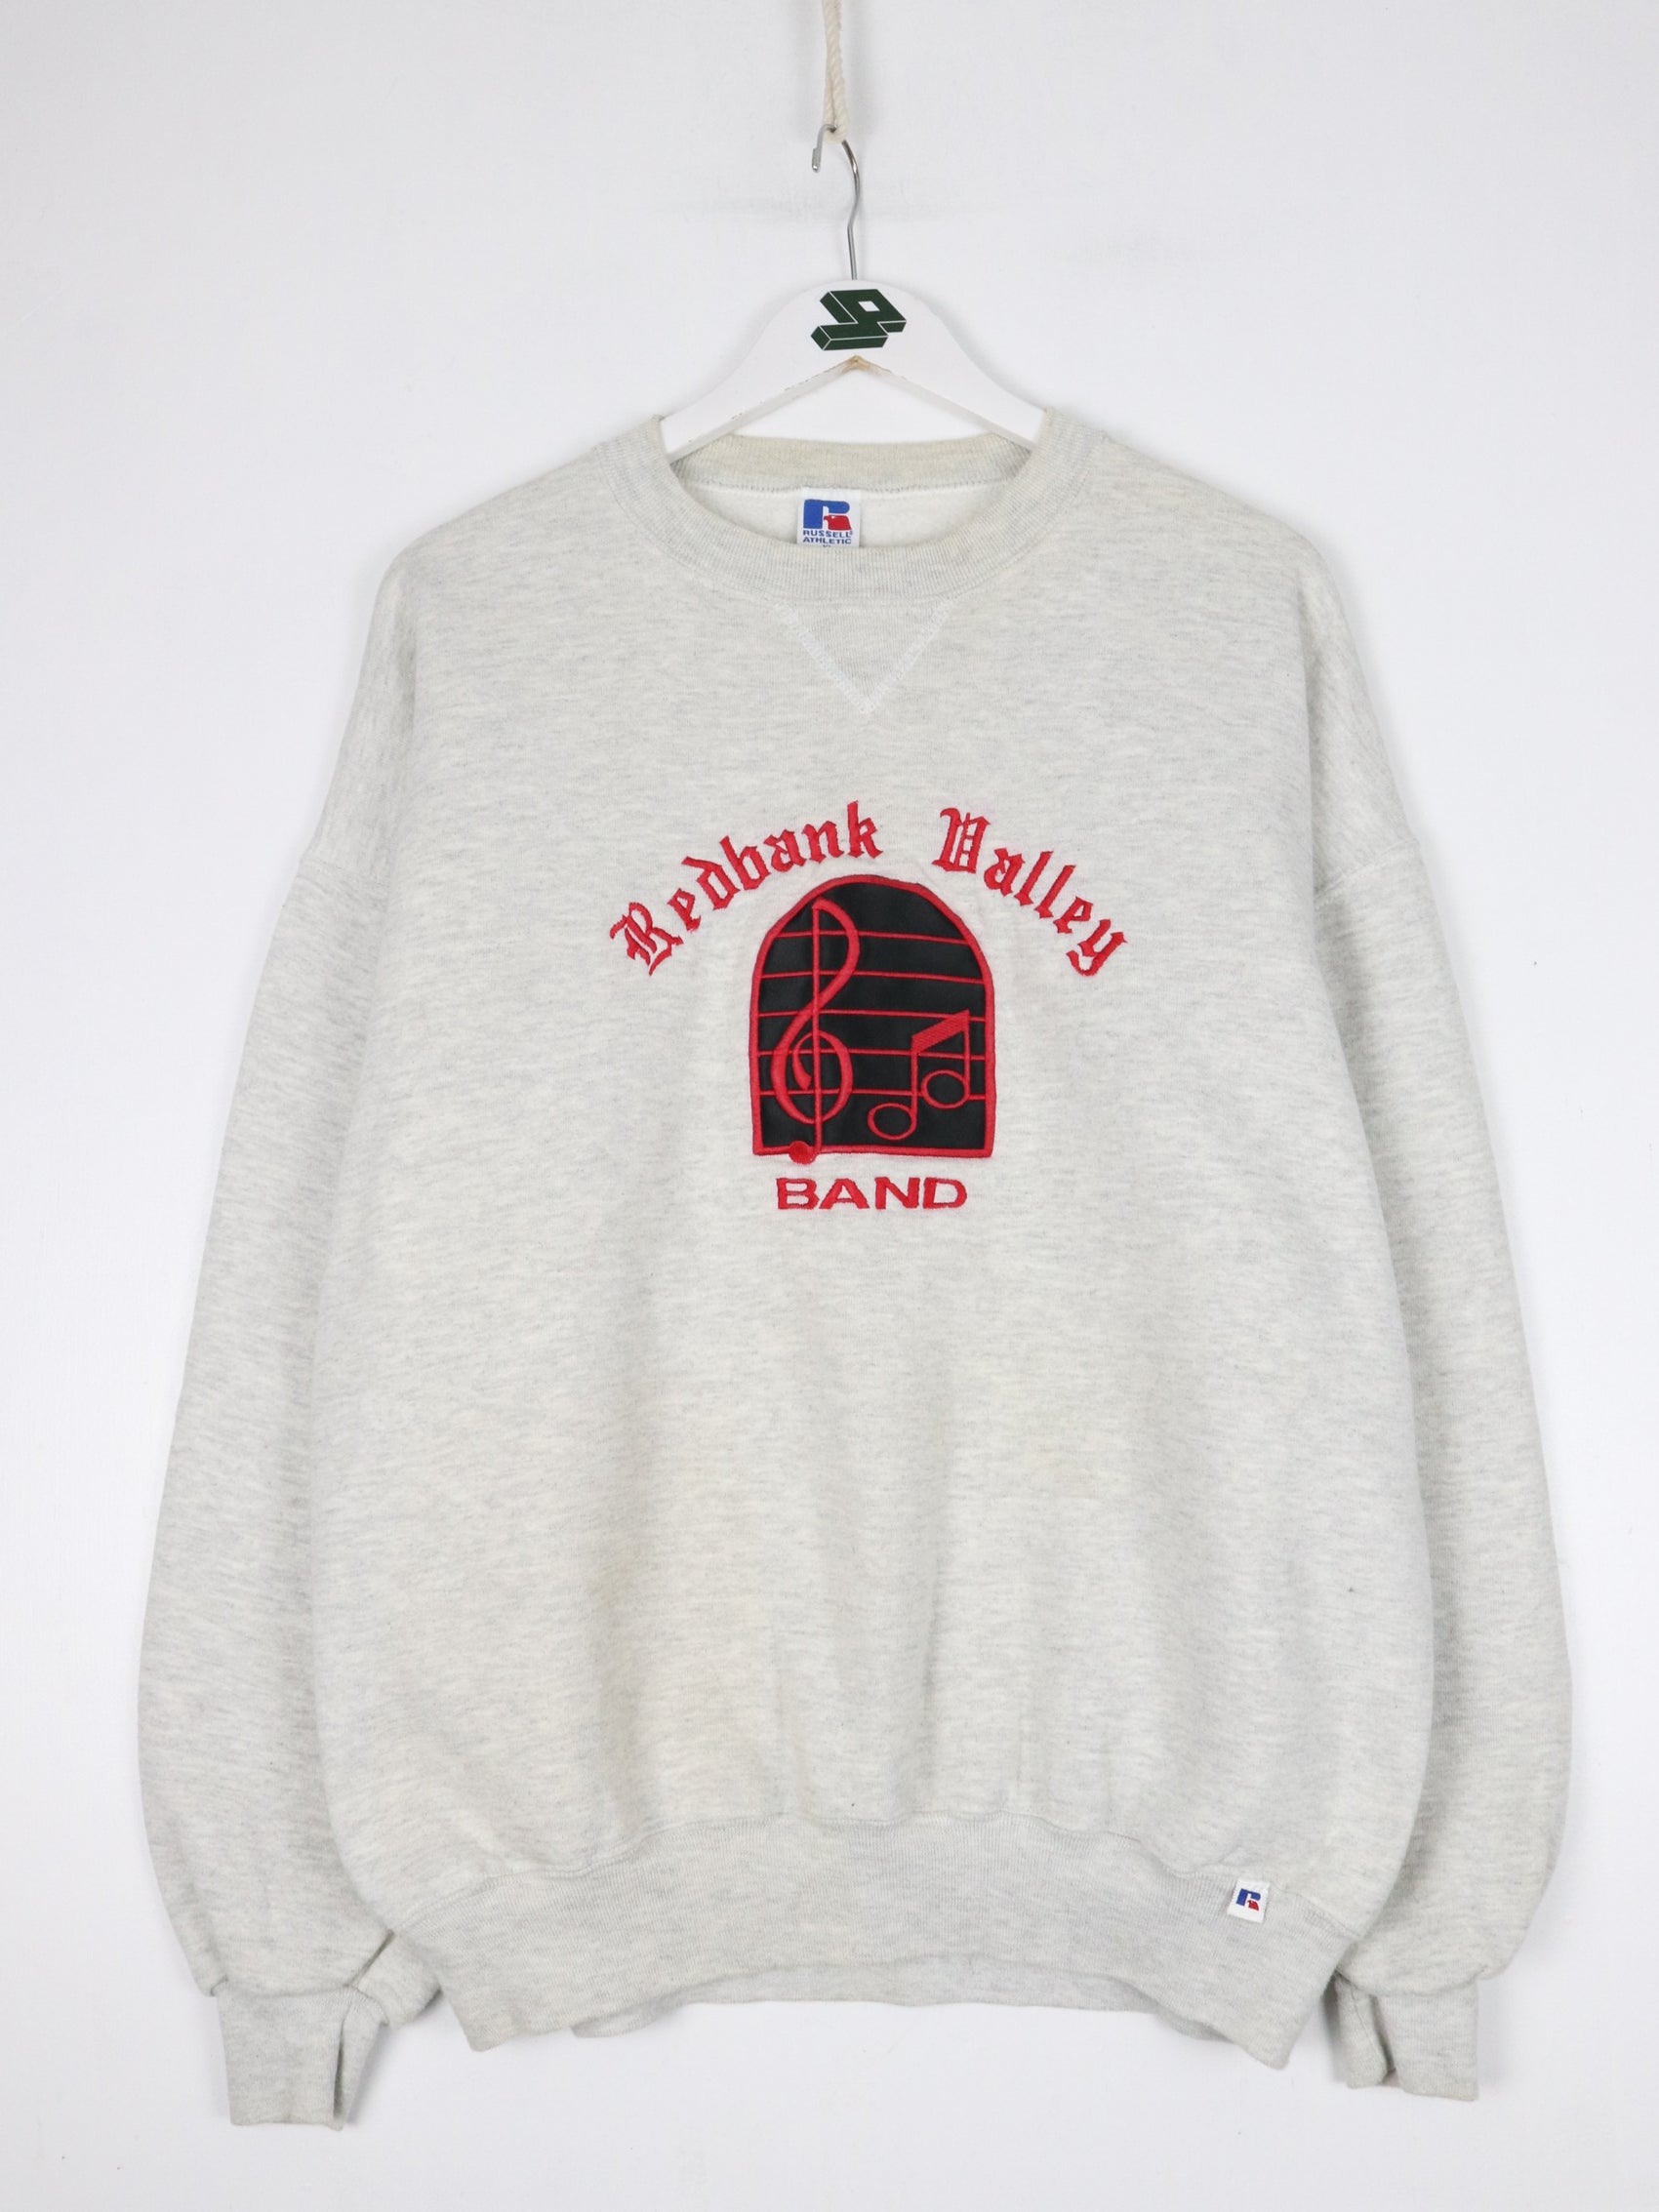 Vintage Redbank Valley Band Sweatshirt Mens XL Grey 90s Russell Athletic